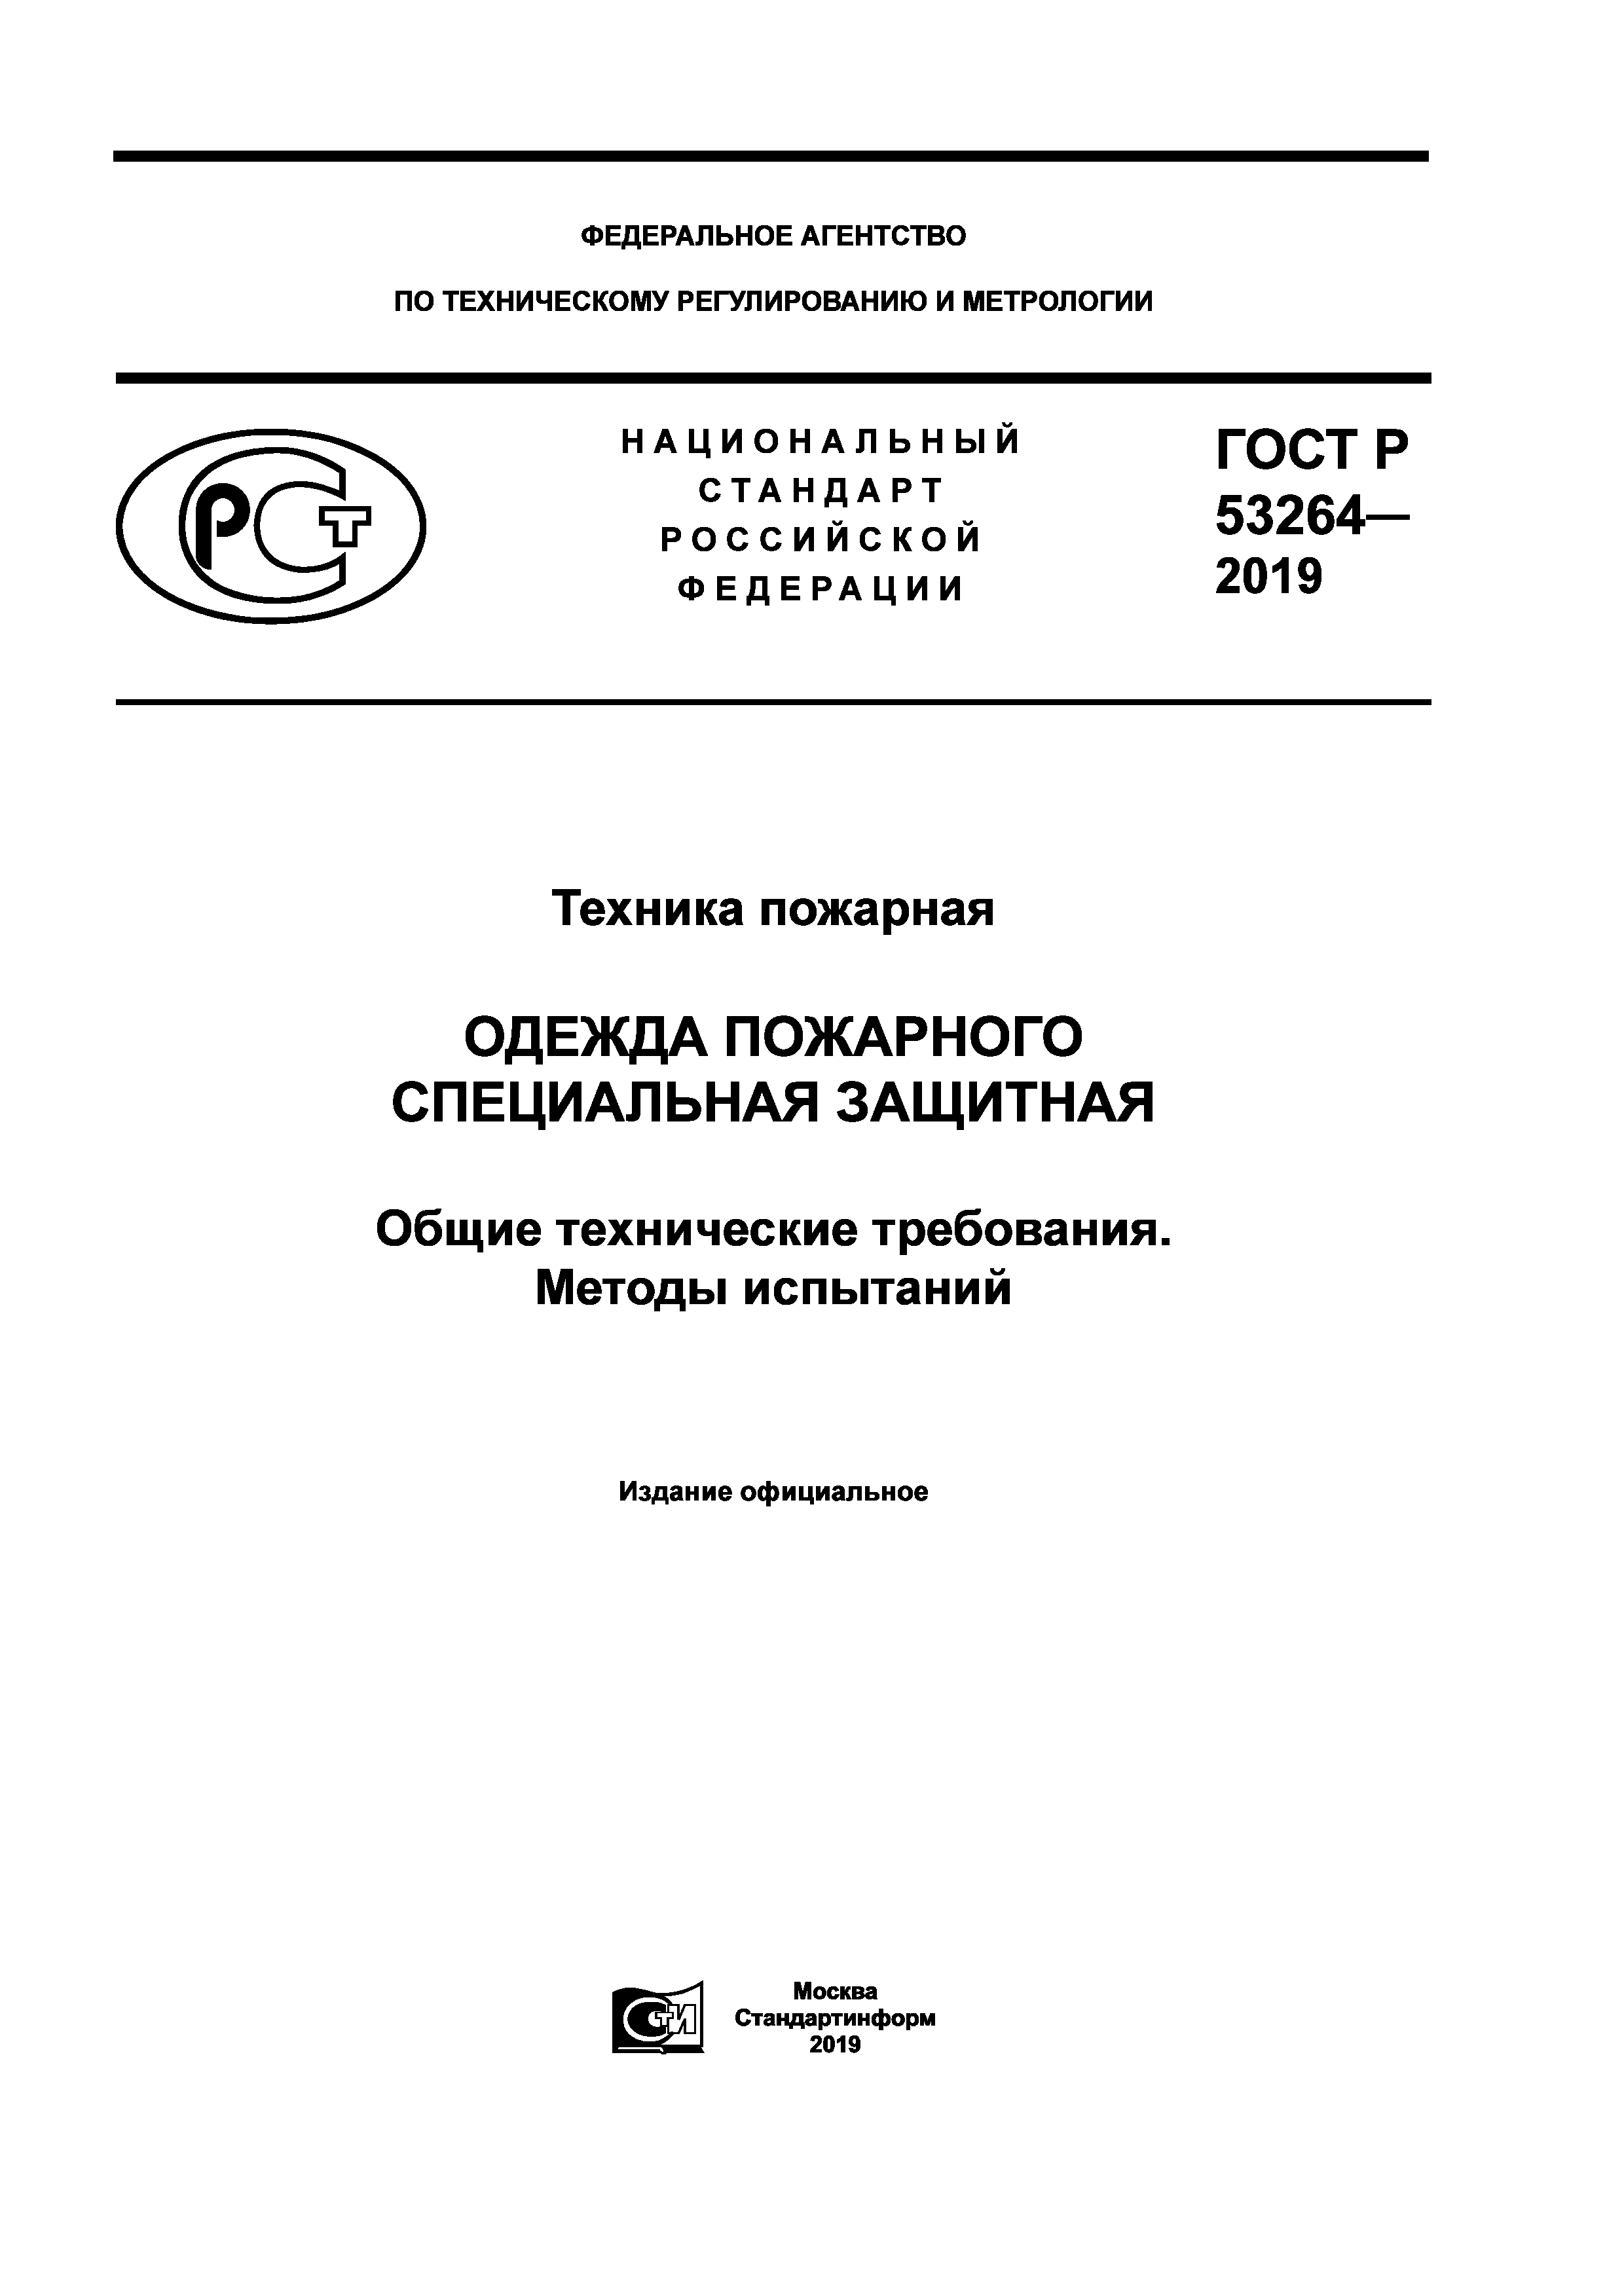 ГОСТ Р 53264-2019